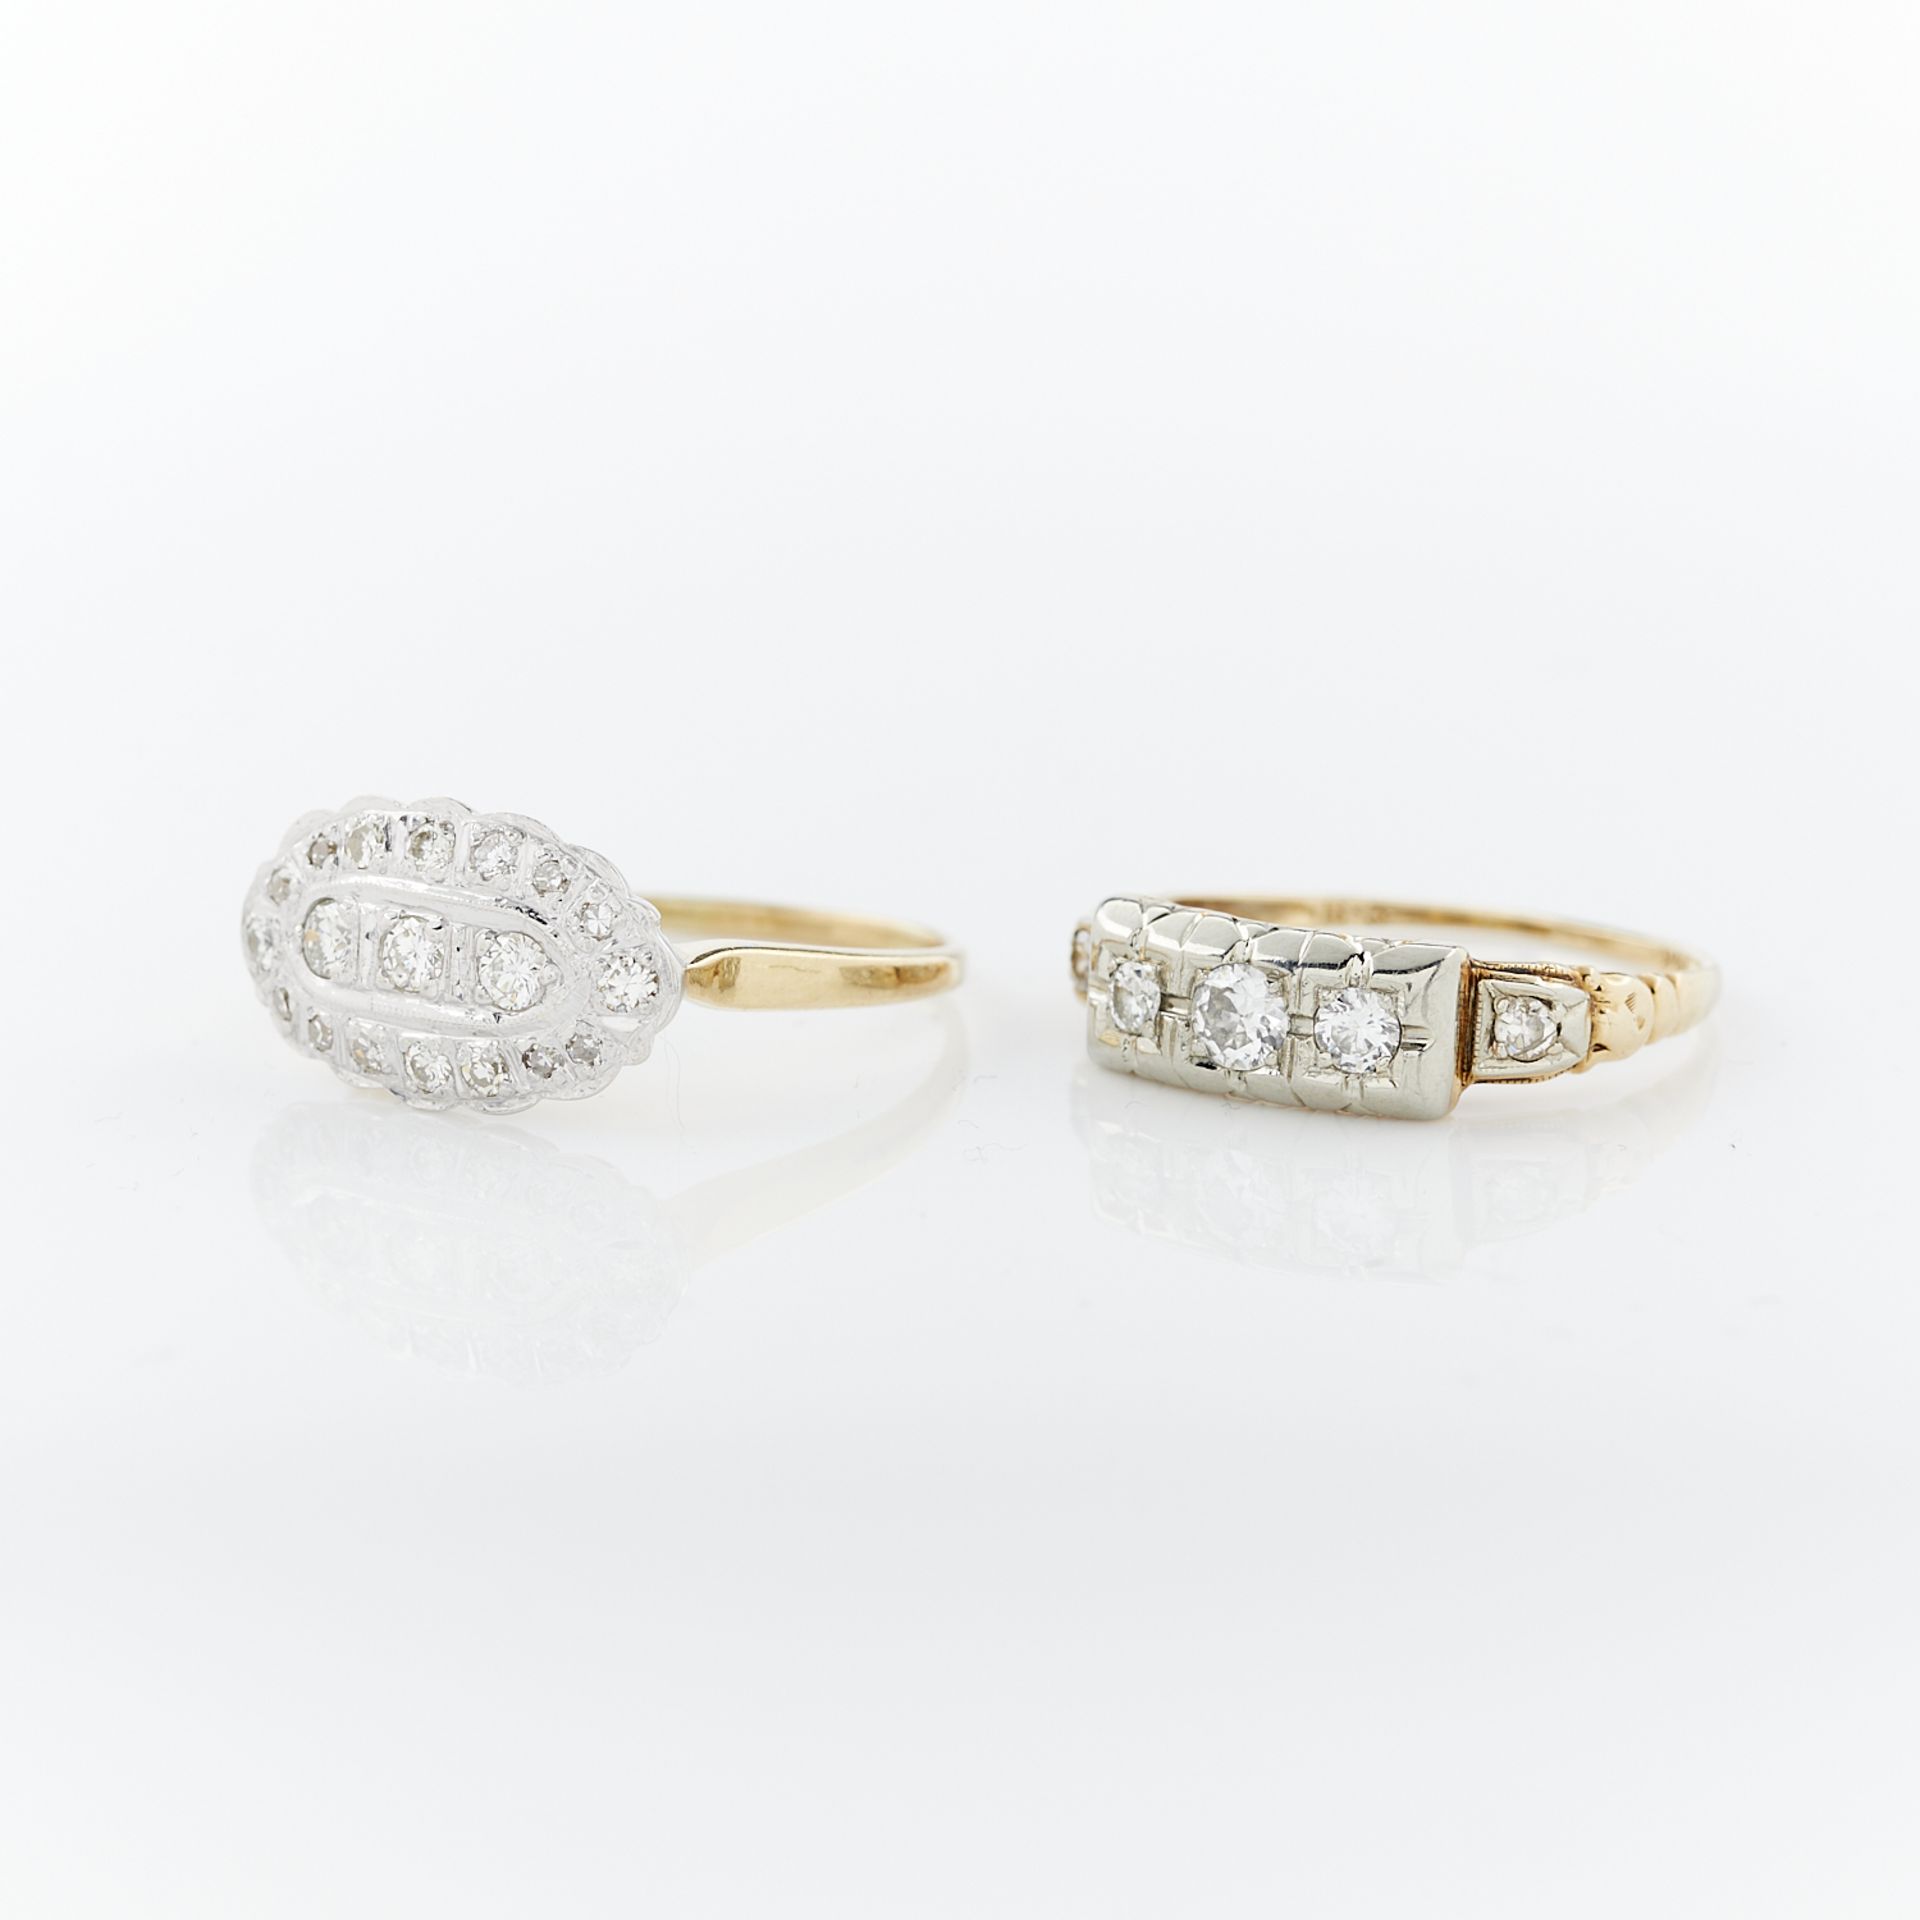 2 14k Gold Art Deco Style Diamond Rings